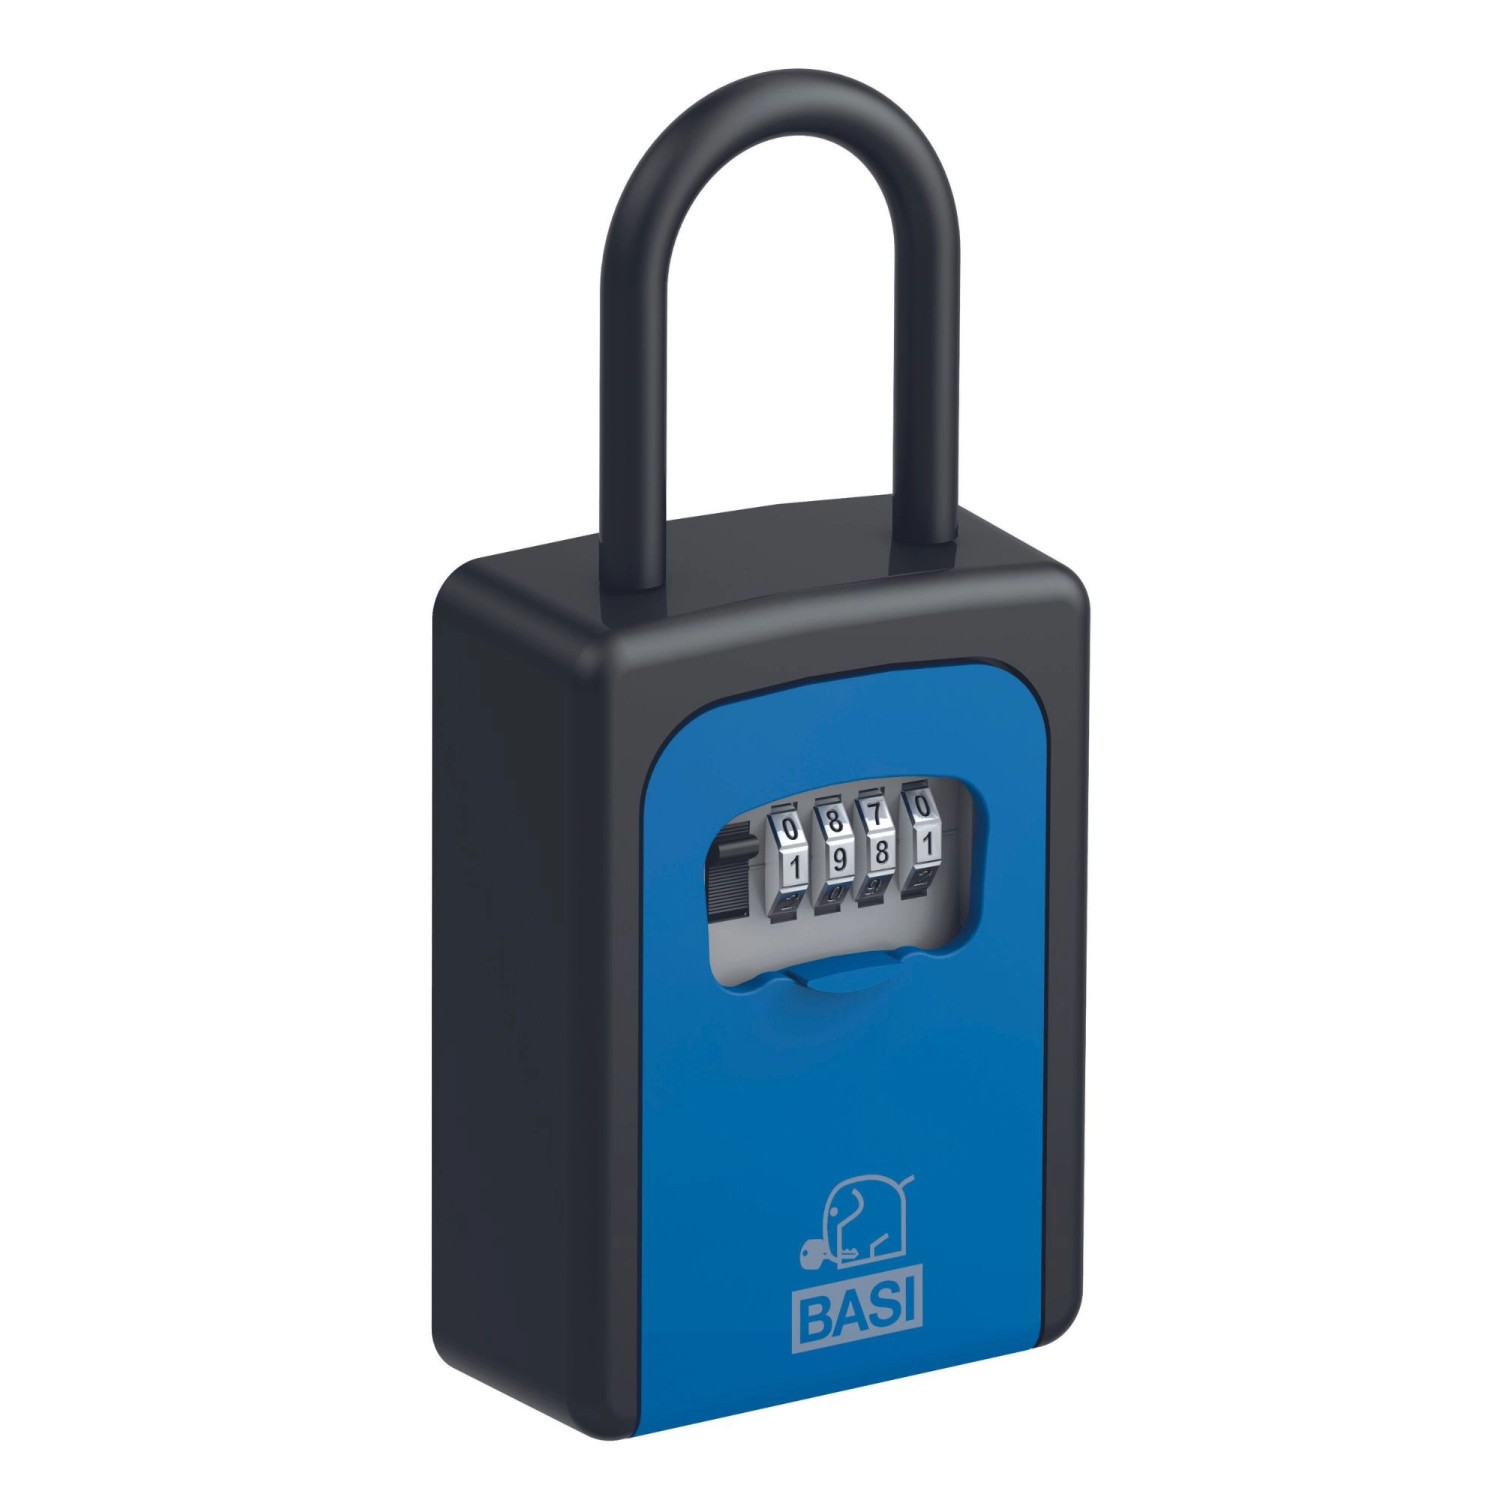 Basi - Schlüsselsafe - SSZ 200B - Schwarz-Blau - mit Zahlenschloss - Aluminium - 2101-0005-1113